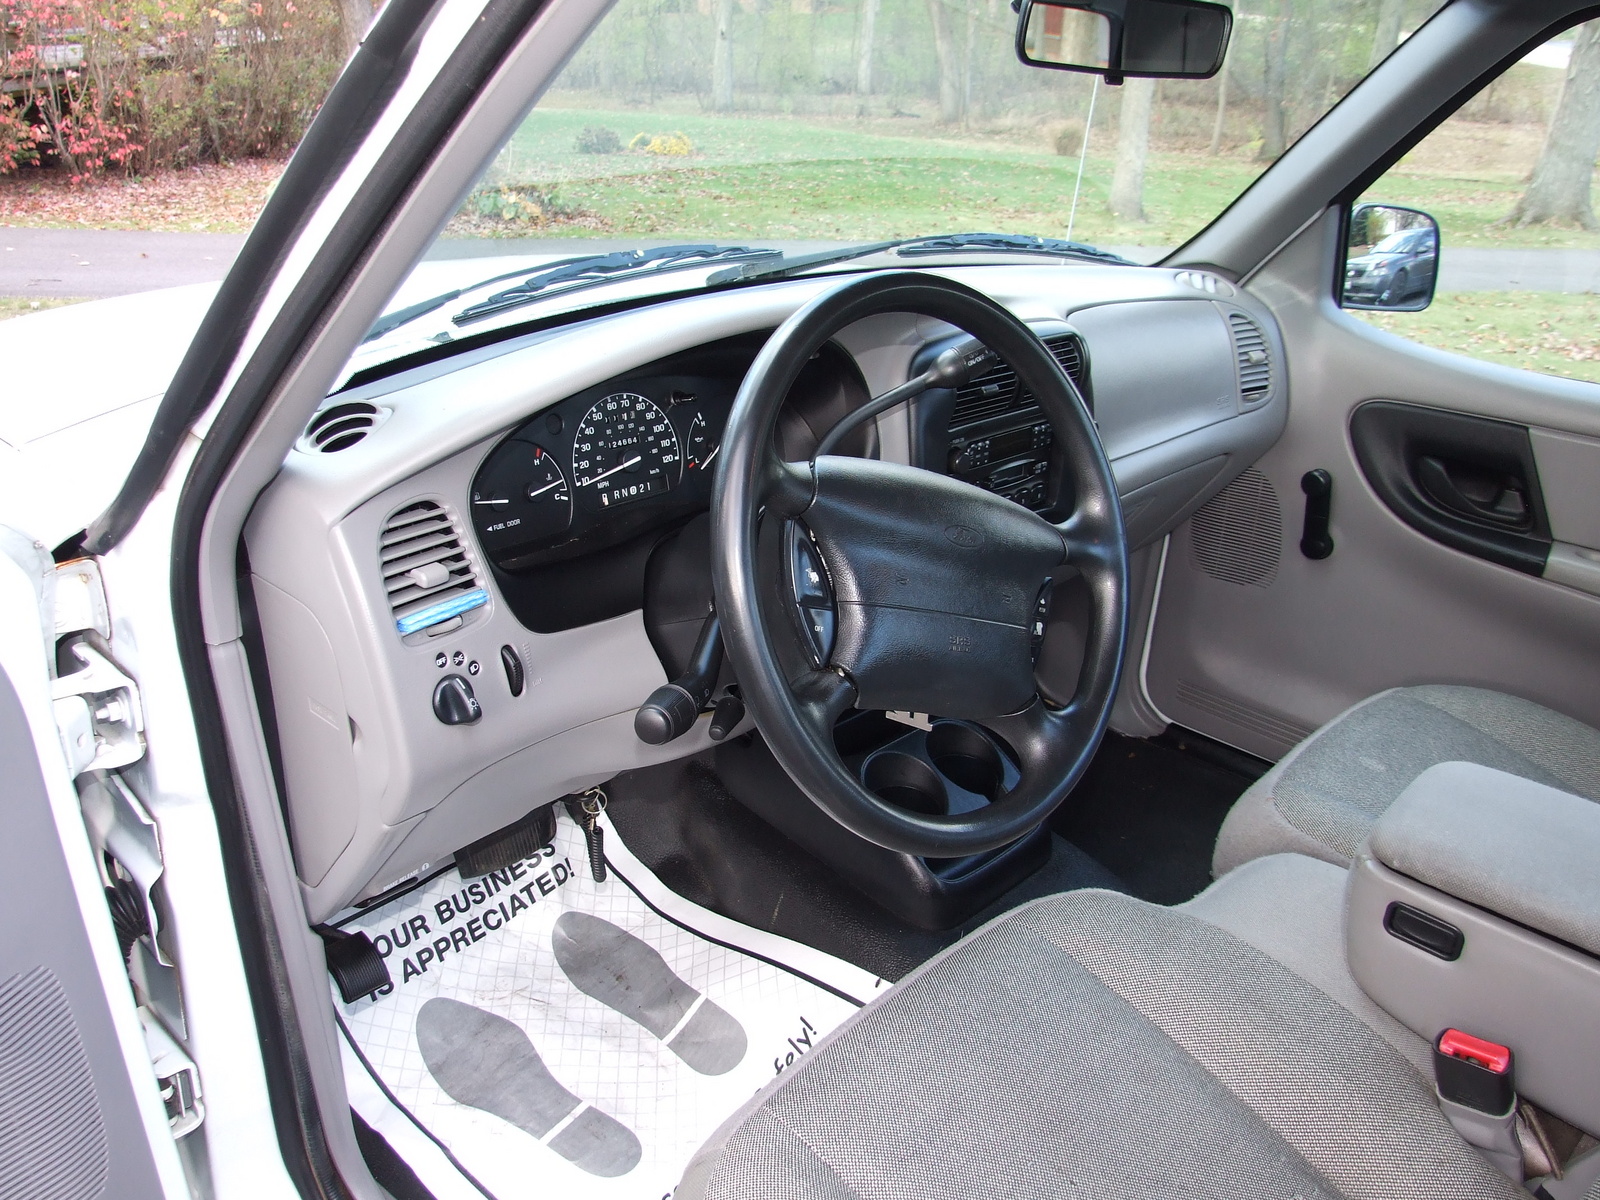 2000 Ford ranger interior trim #3